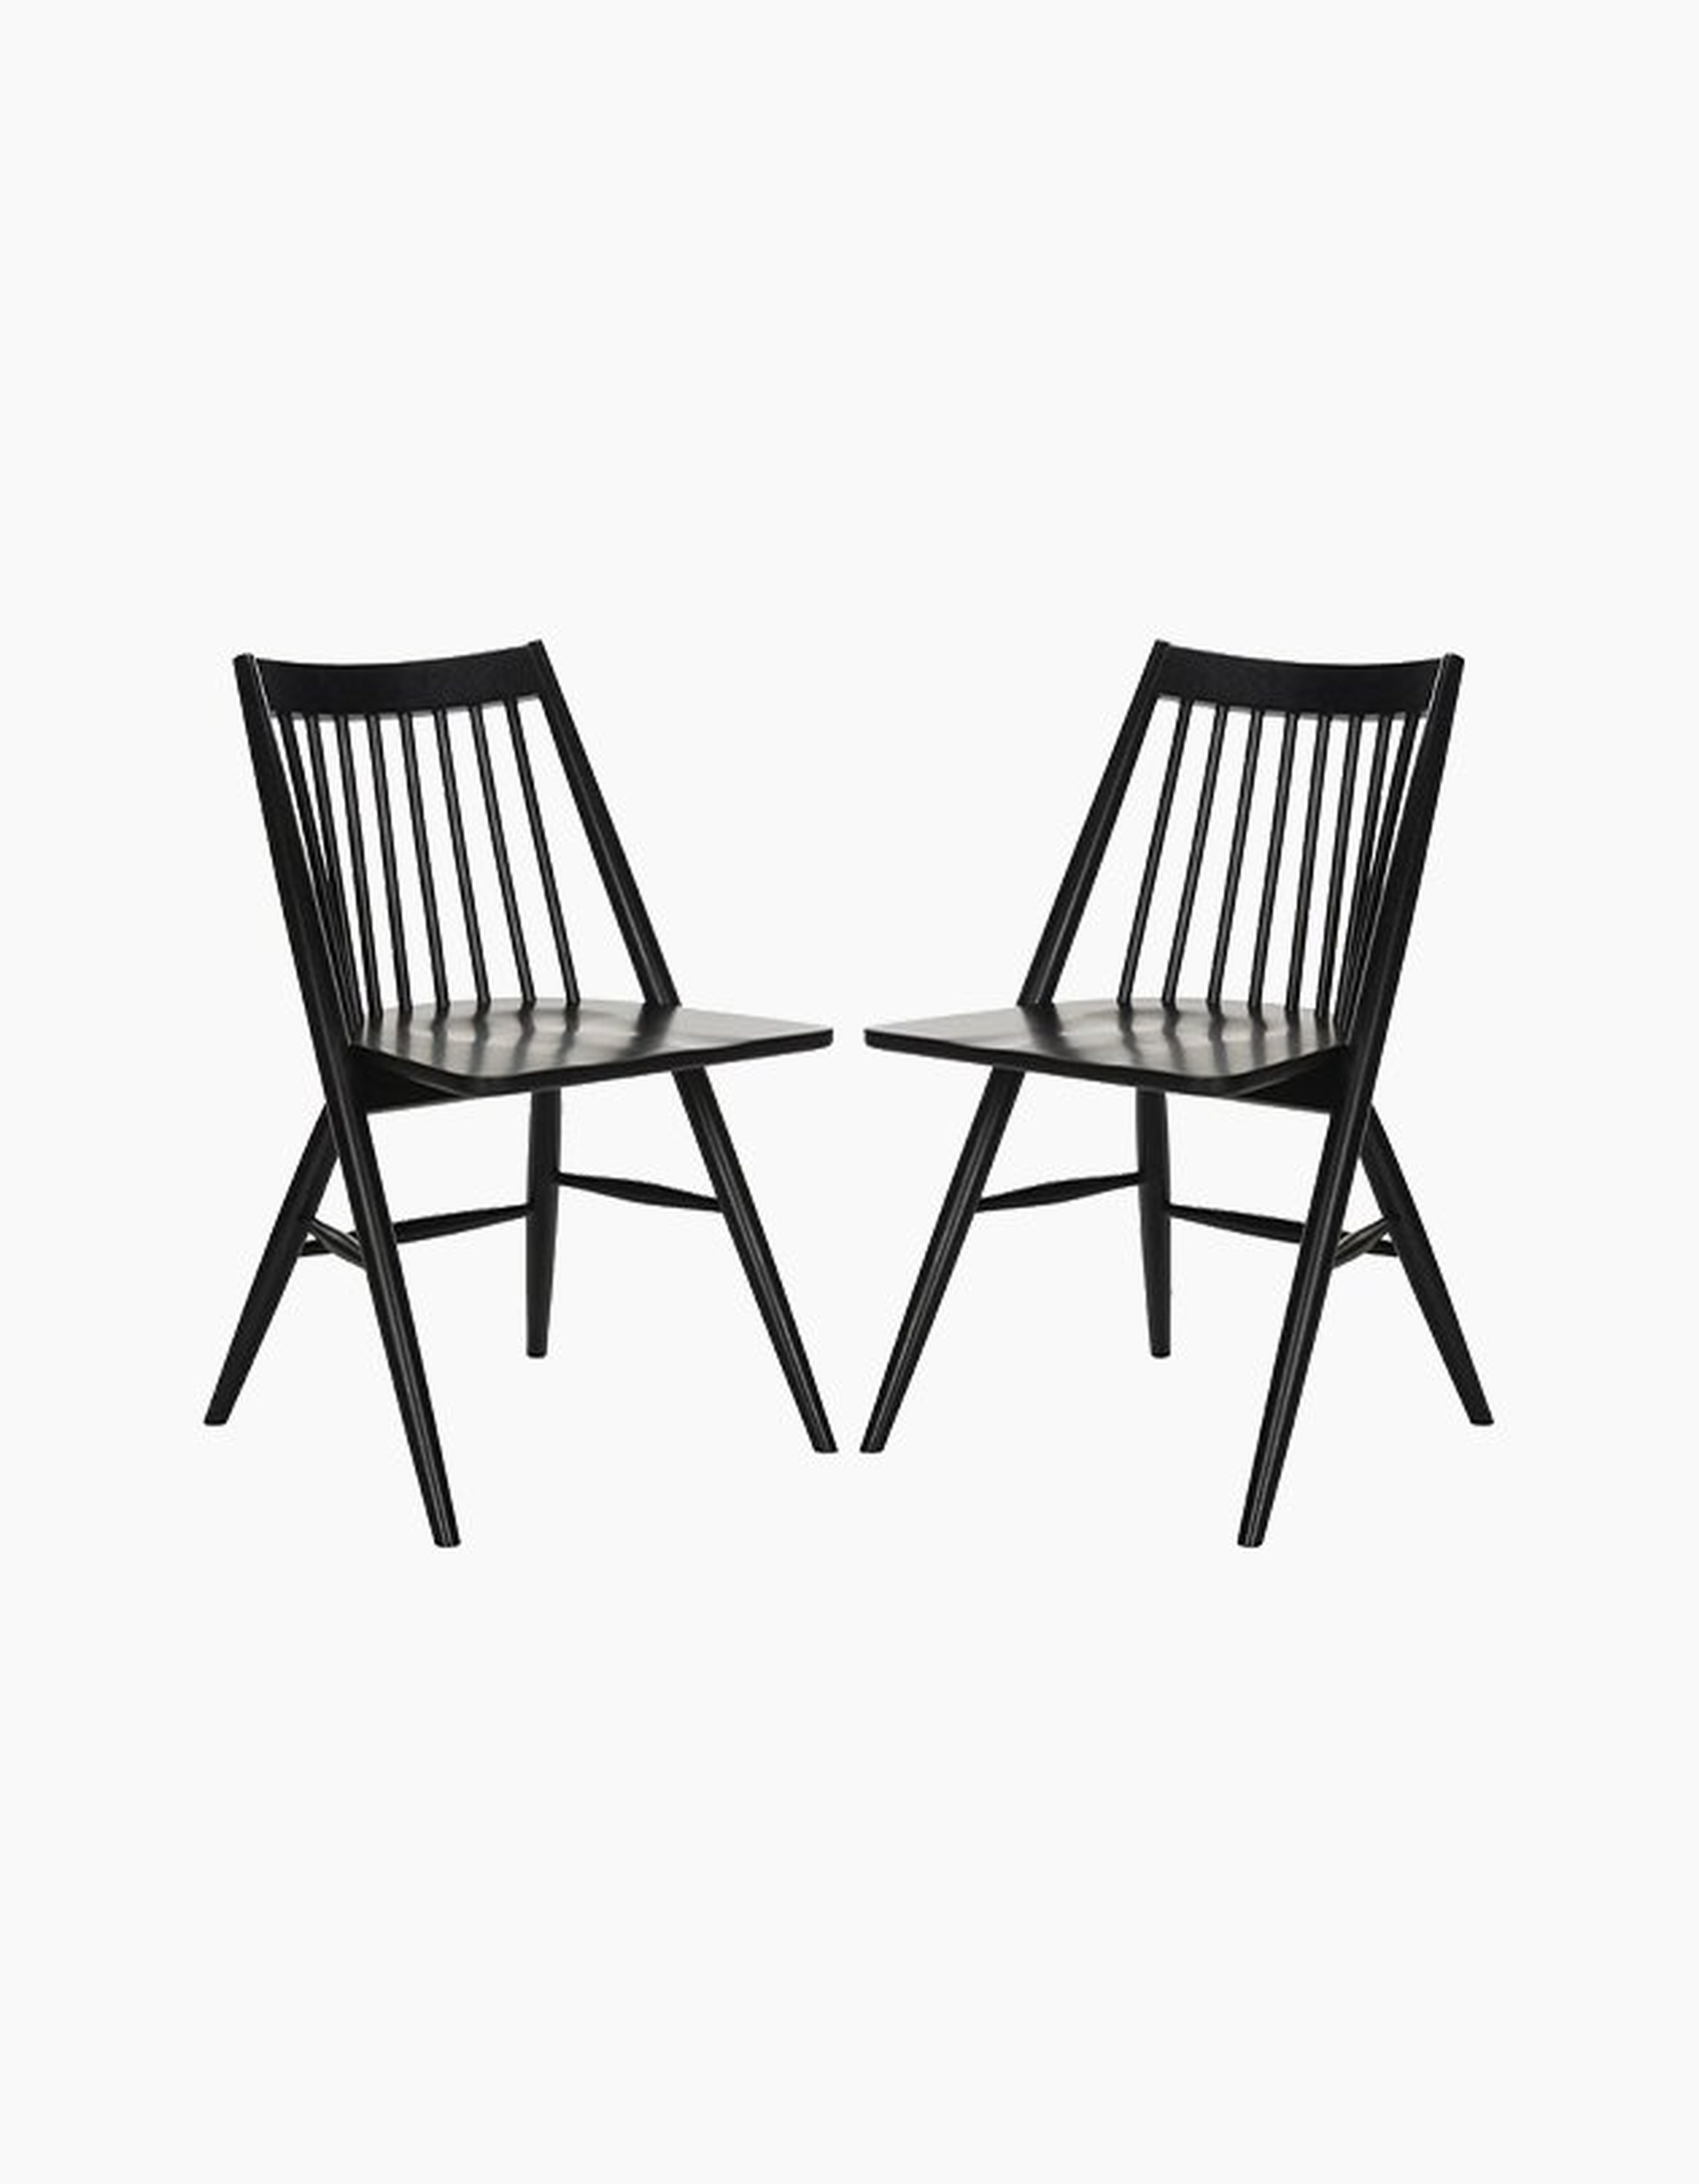 Wren 19"H Spindle Dining Chair - Black - Safavieh (Set 2) - Safavieh